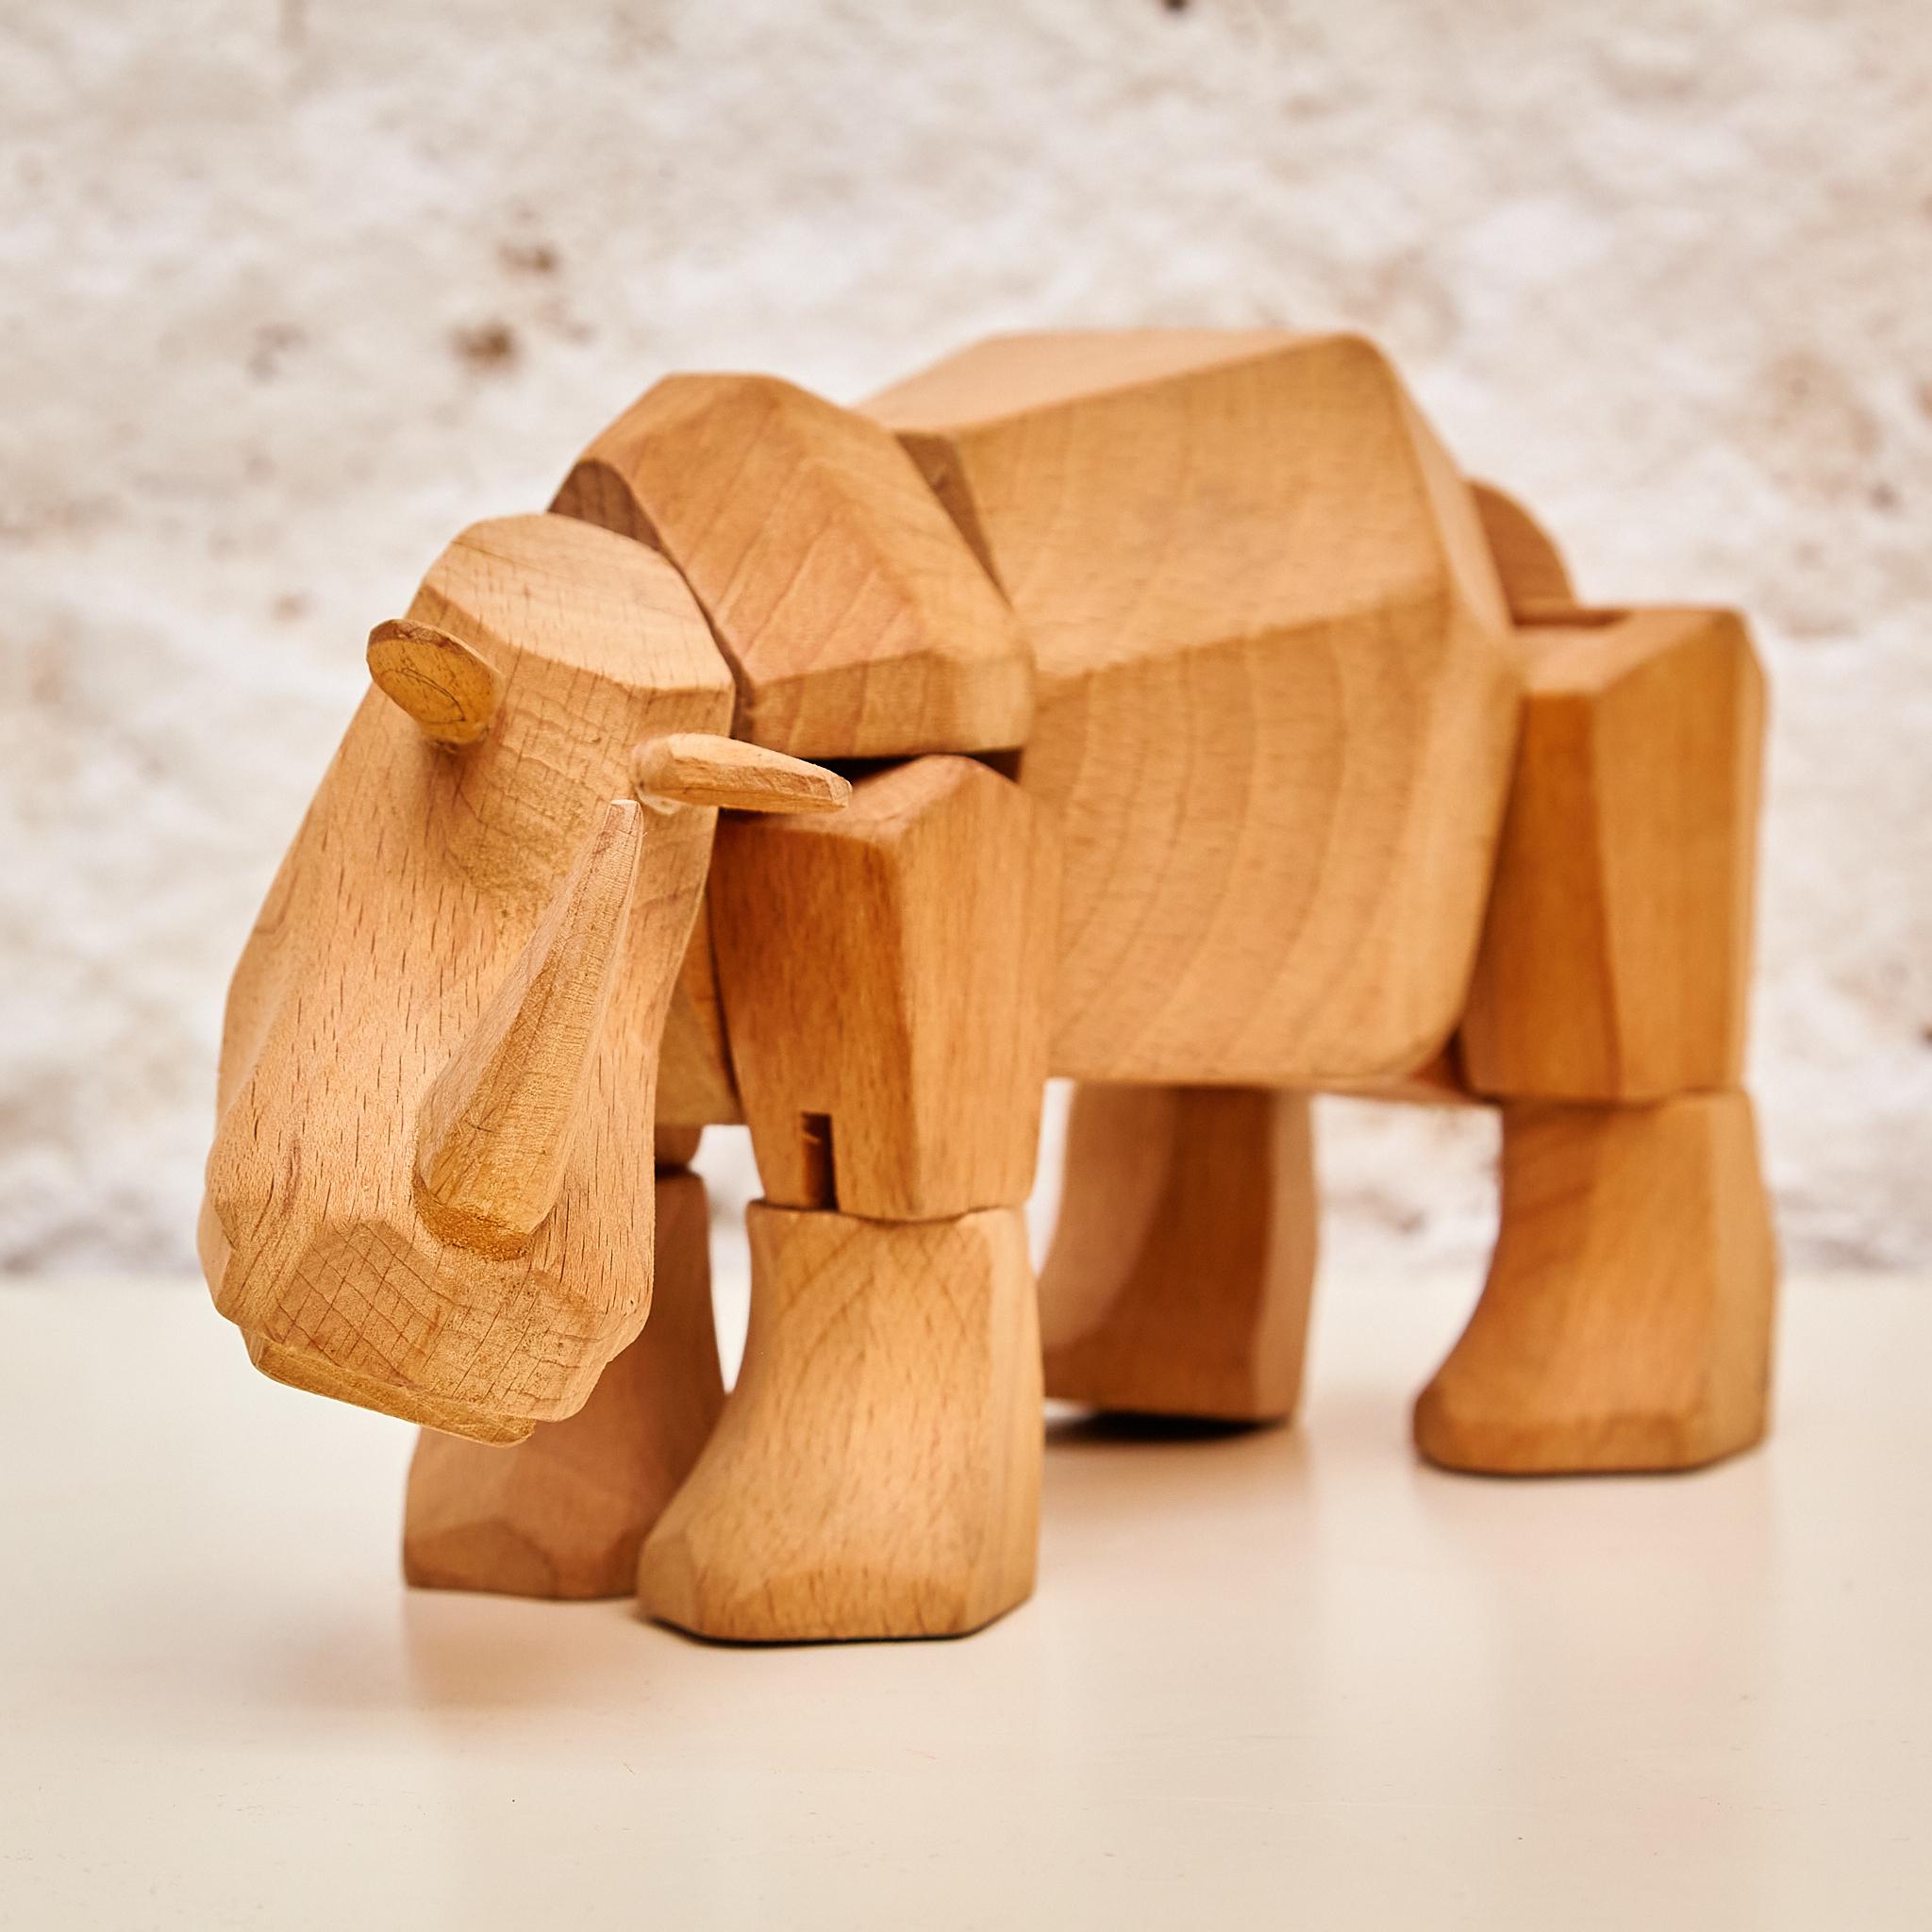 Artful Mastery: Solid Wood Rhino Sculpture 'Areaware' by David Weeks Studio 5